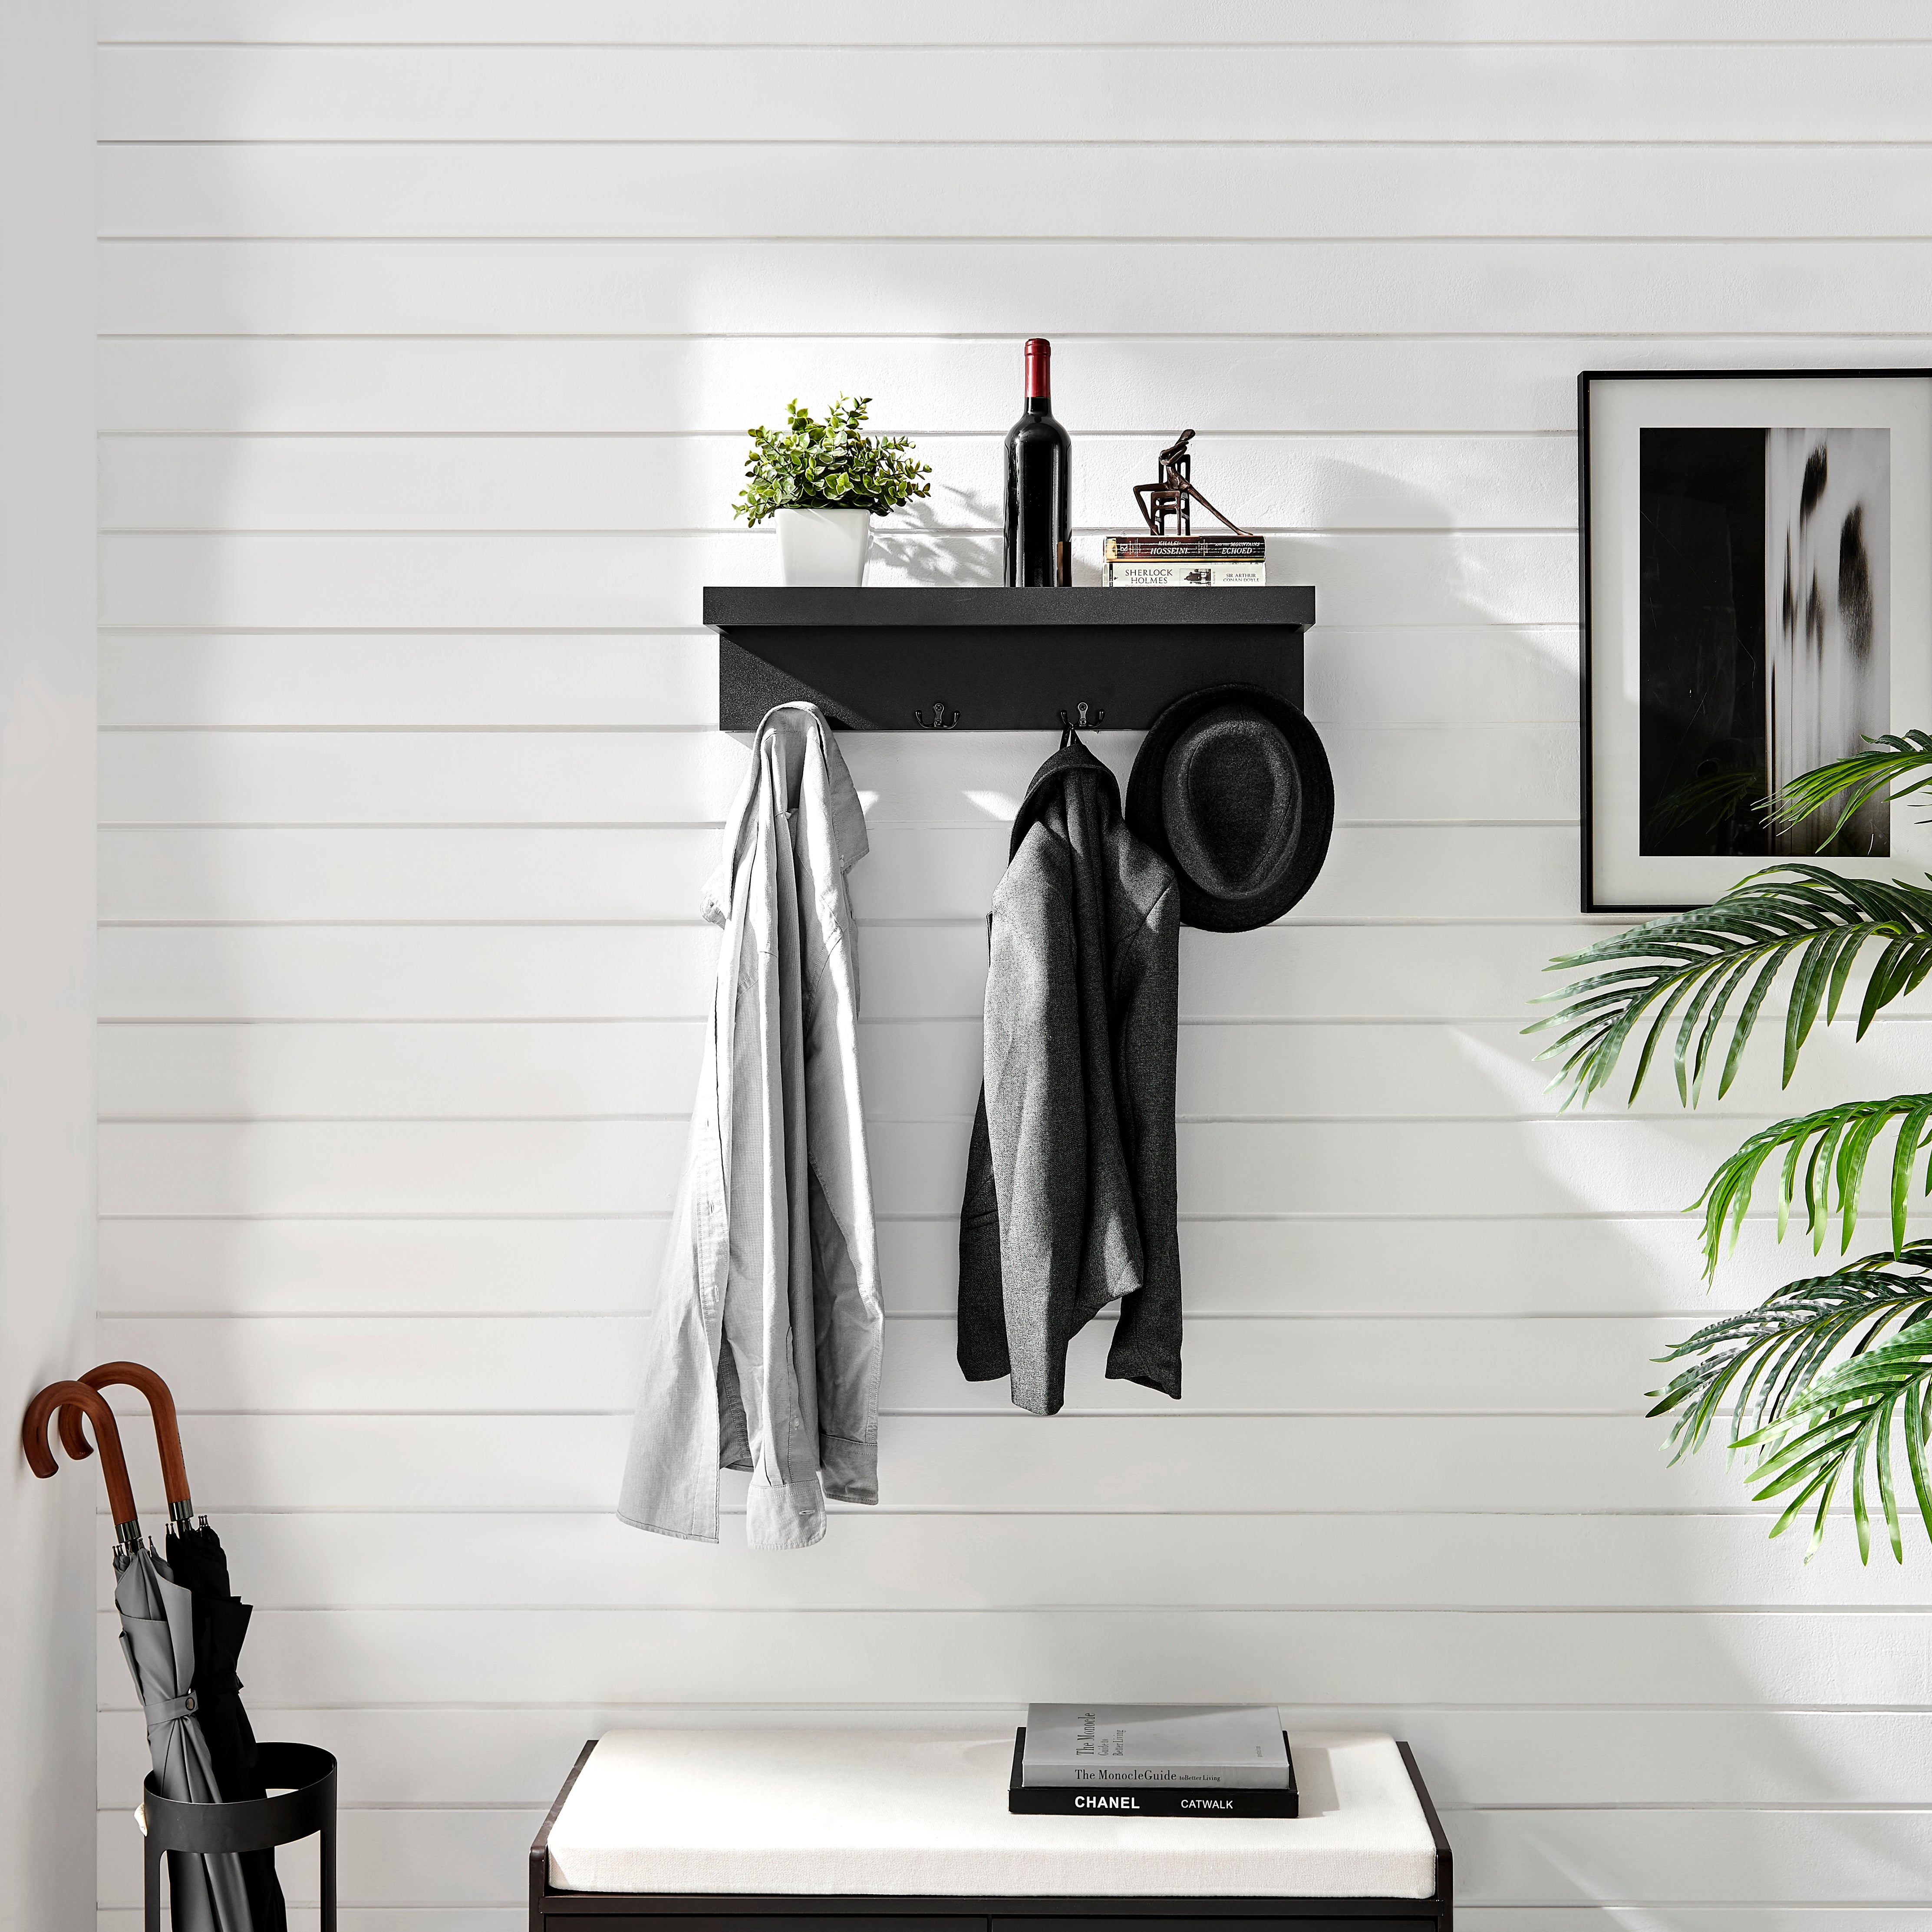 Danya B 29 in. 2-Tier Black Ledge Wall Shelf Entryway or Bathroom Organizer with Five Hanging Coat or Towel Hooks